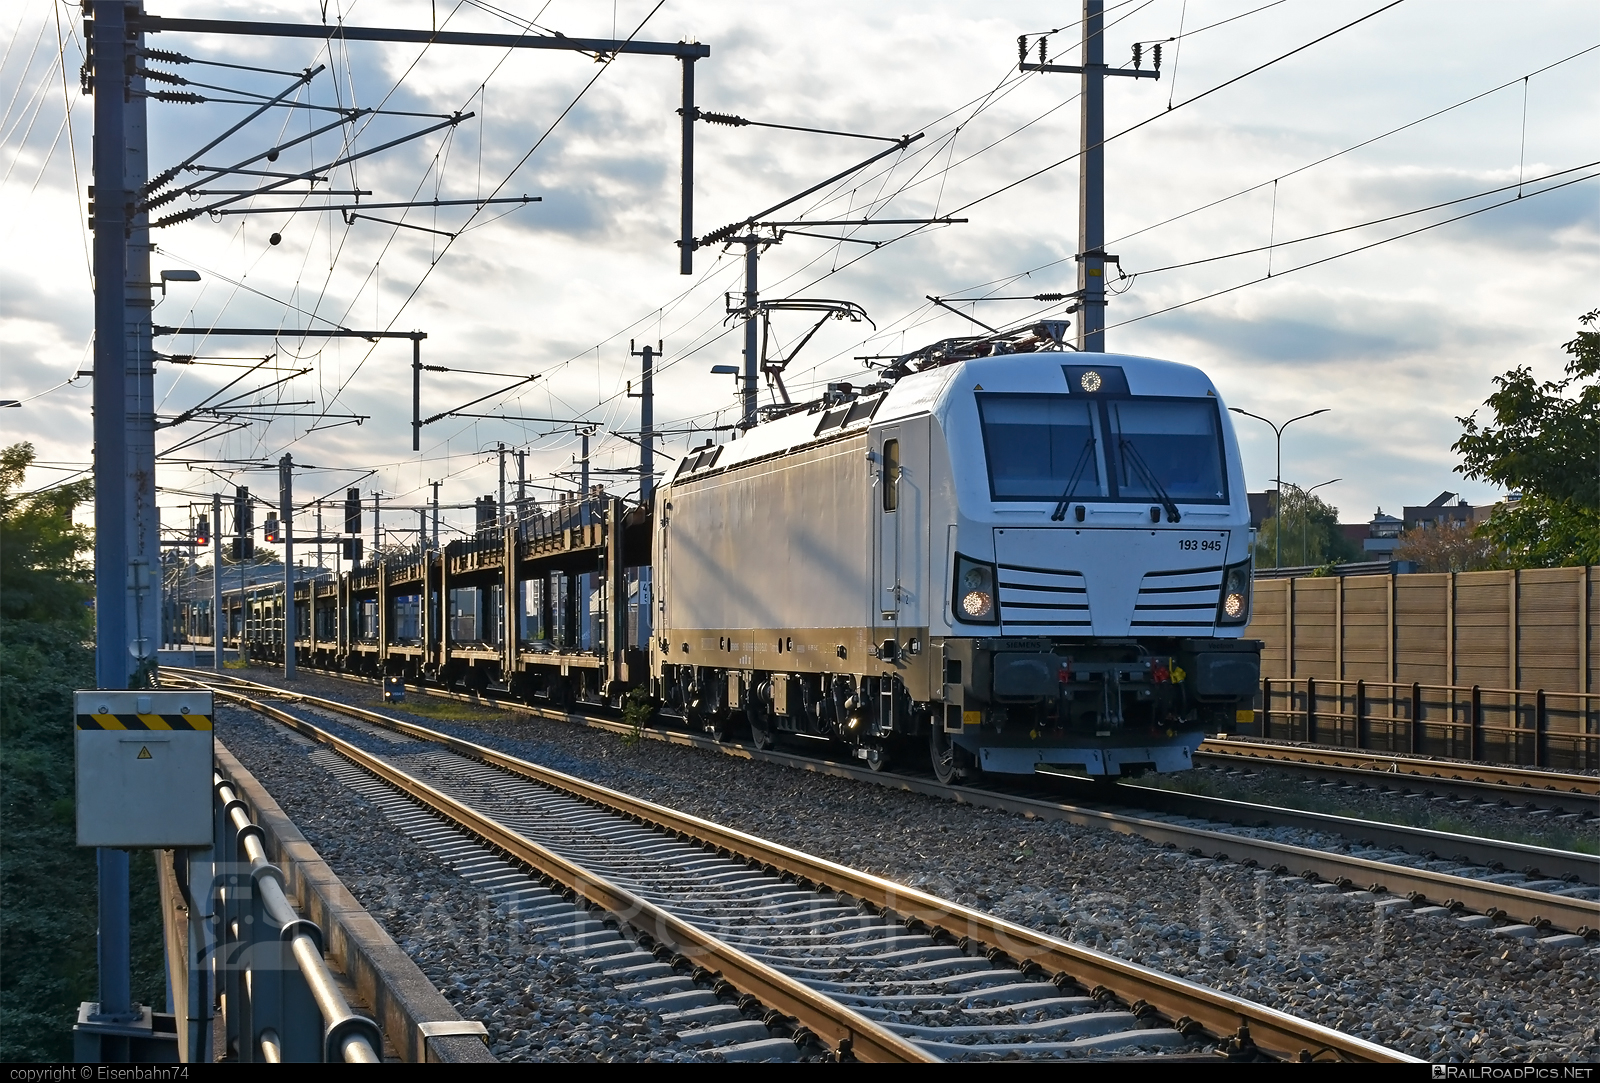 Siemens Vectron MS - 193 945 operated by Wiener Lokalbahnen Cargo GmbH #carcarrierwagon #ell #ellgermany #eloc #europeanlocomotiveleasing #siemens #siemensVectron #siemensVectronMS #vectron #vectronMS #wienerlokalbahnencargo #wienerlokalbahnencargogmbh #wlc